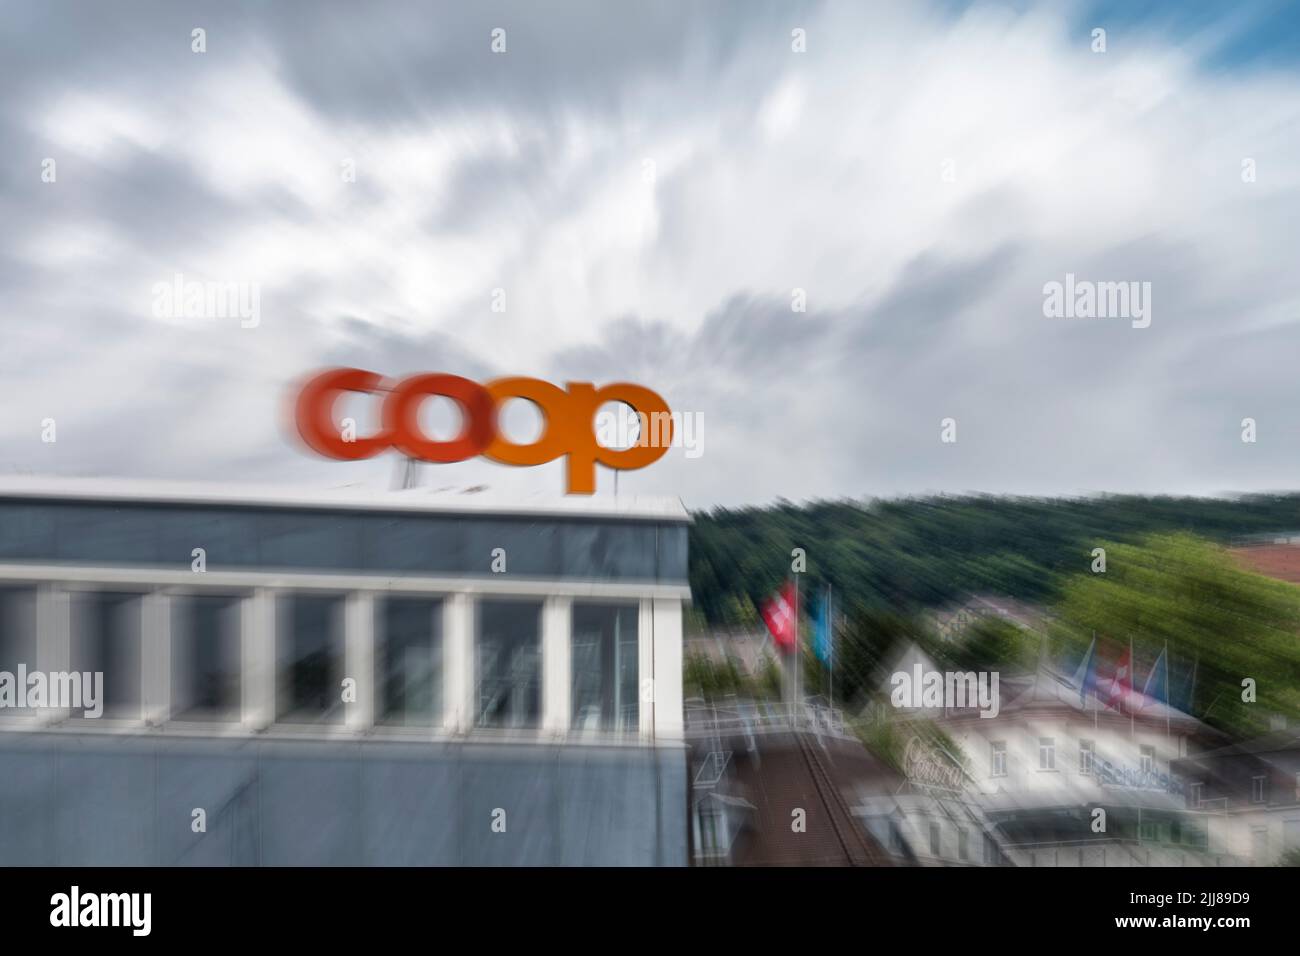 Centro Coop en Zürich an der Limmat, Schweiz Foto de stock